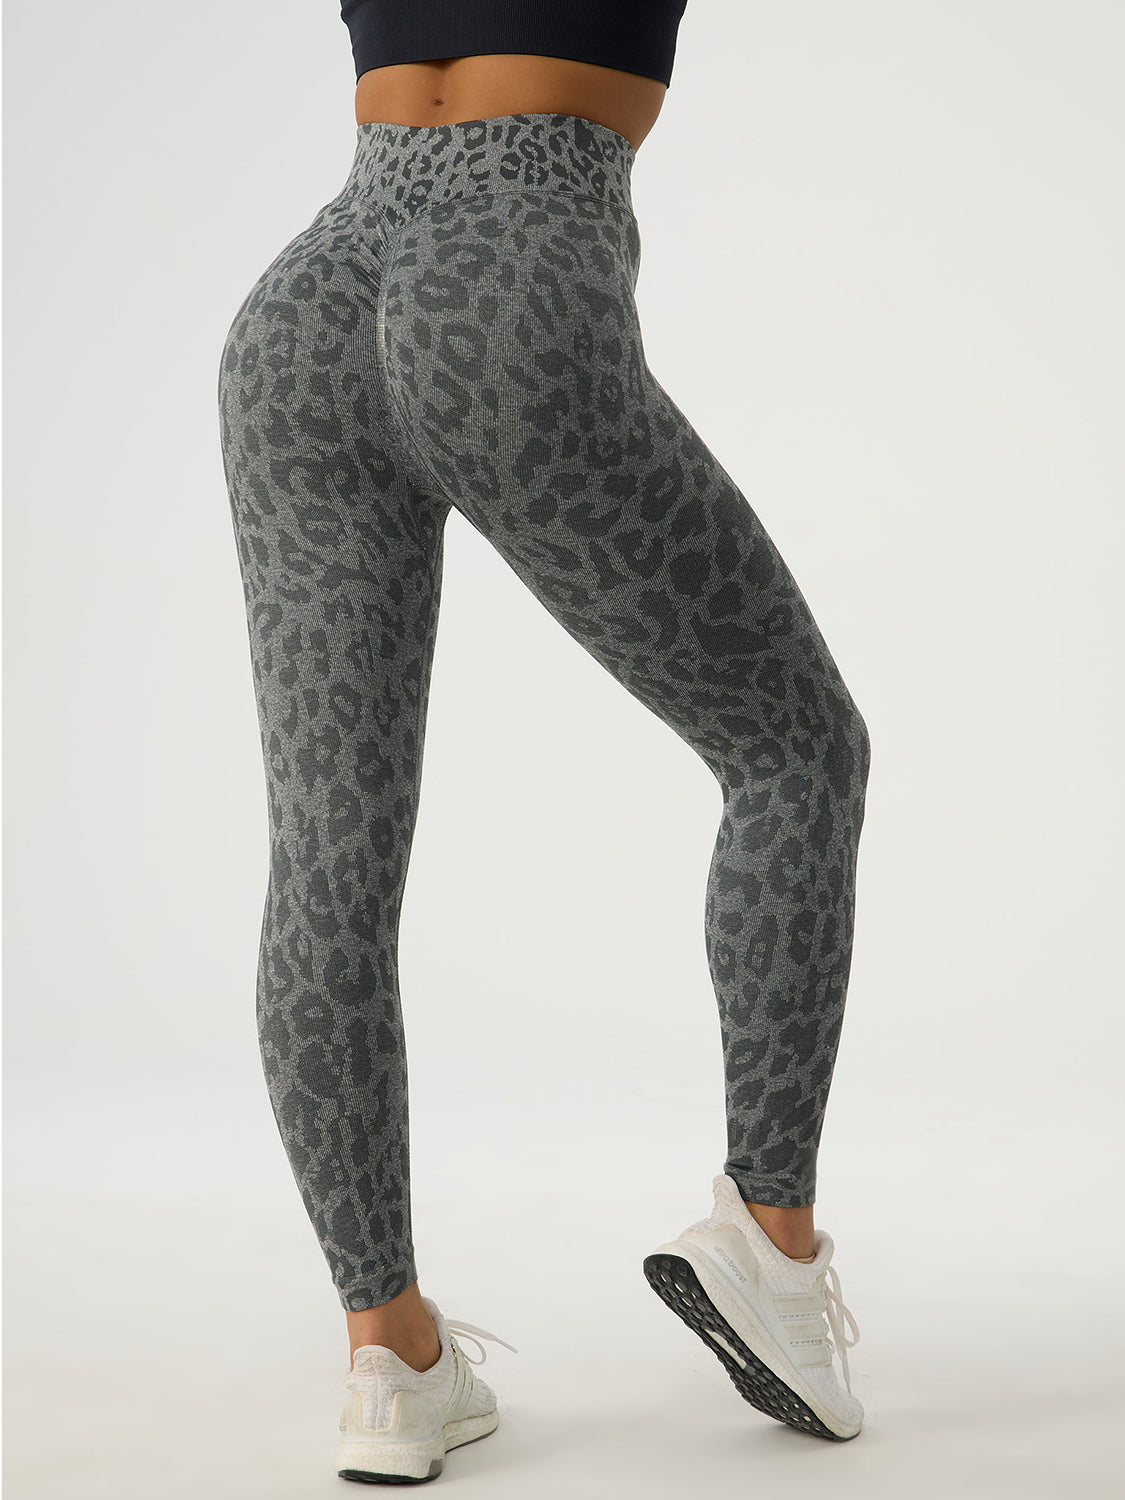 Leopard High Waist Active Pants - House of Binx 